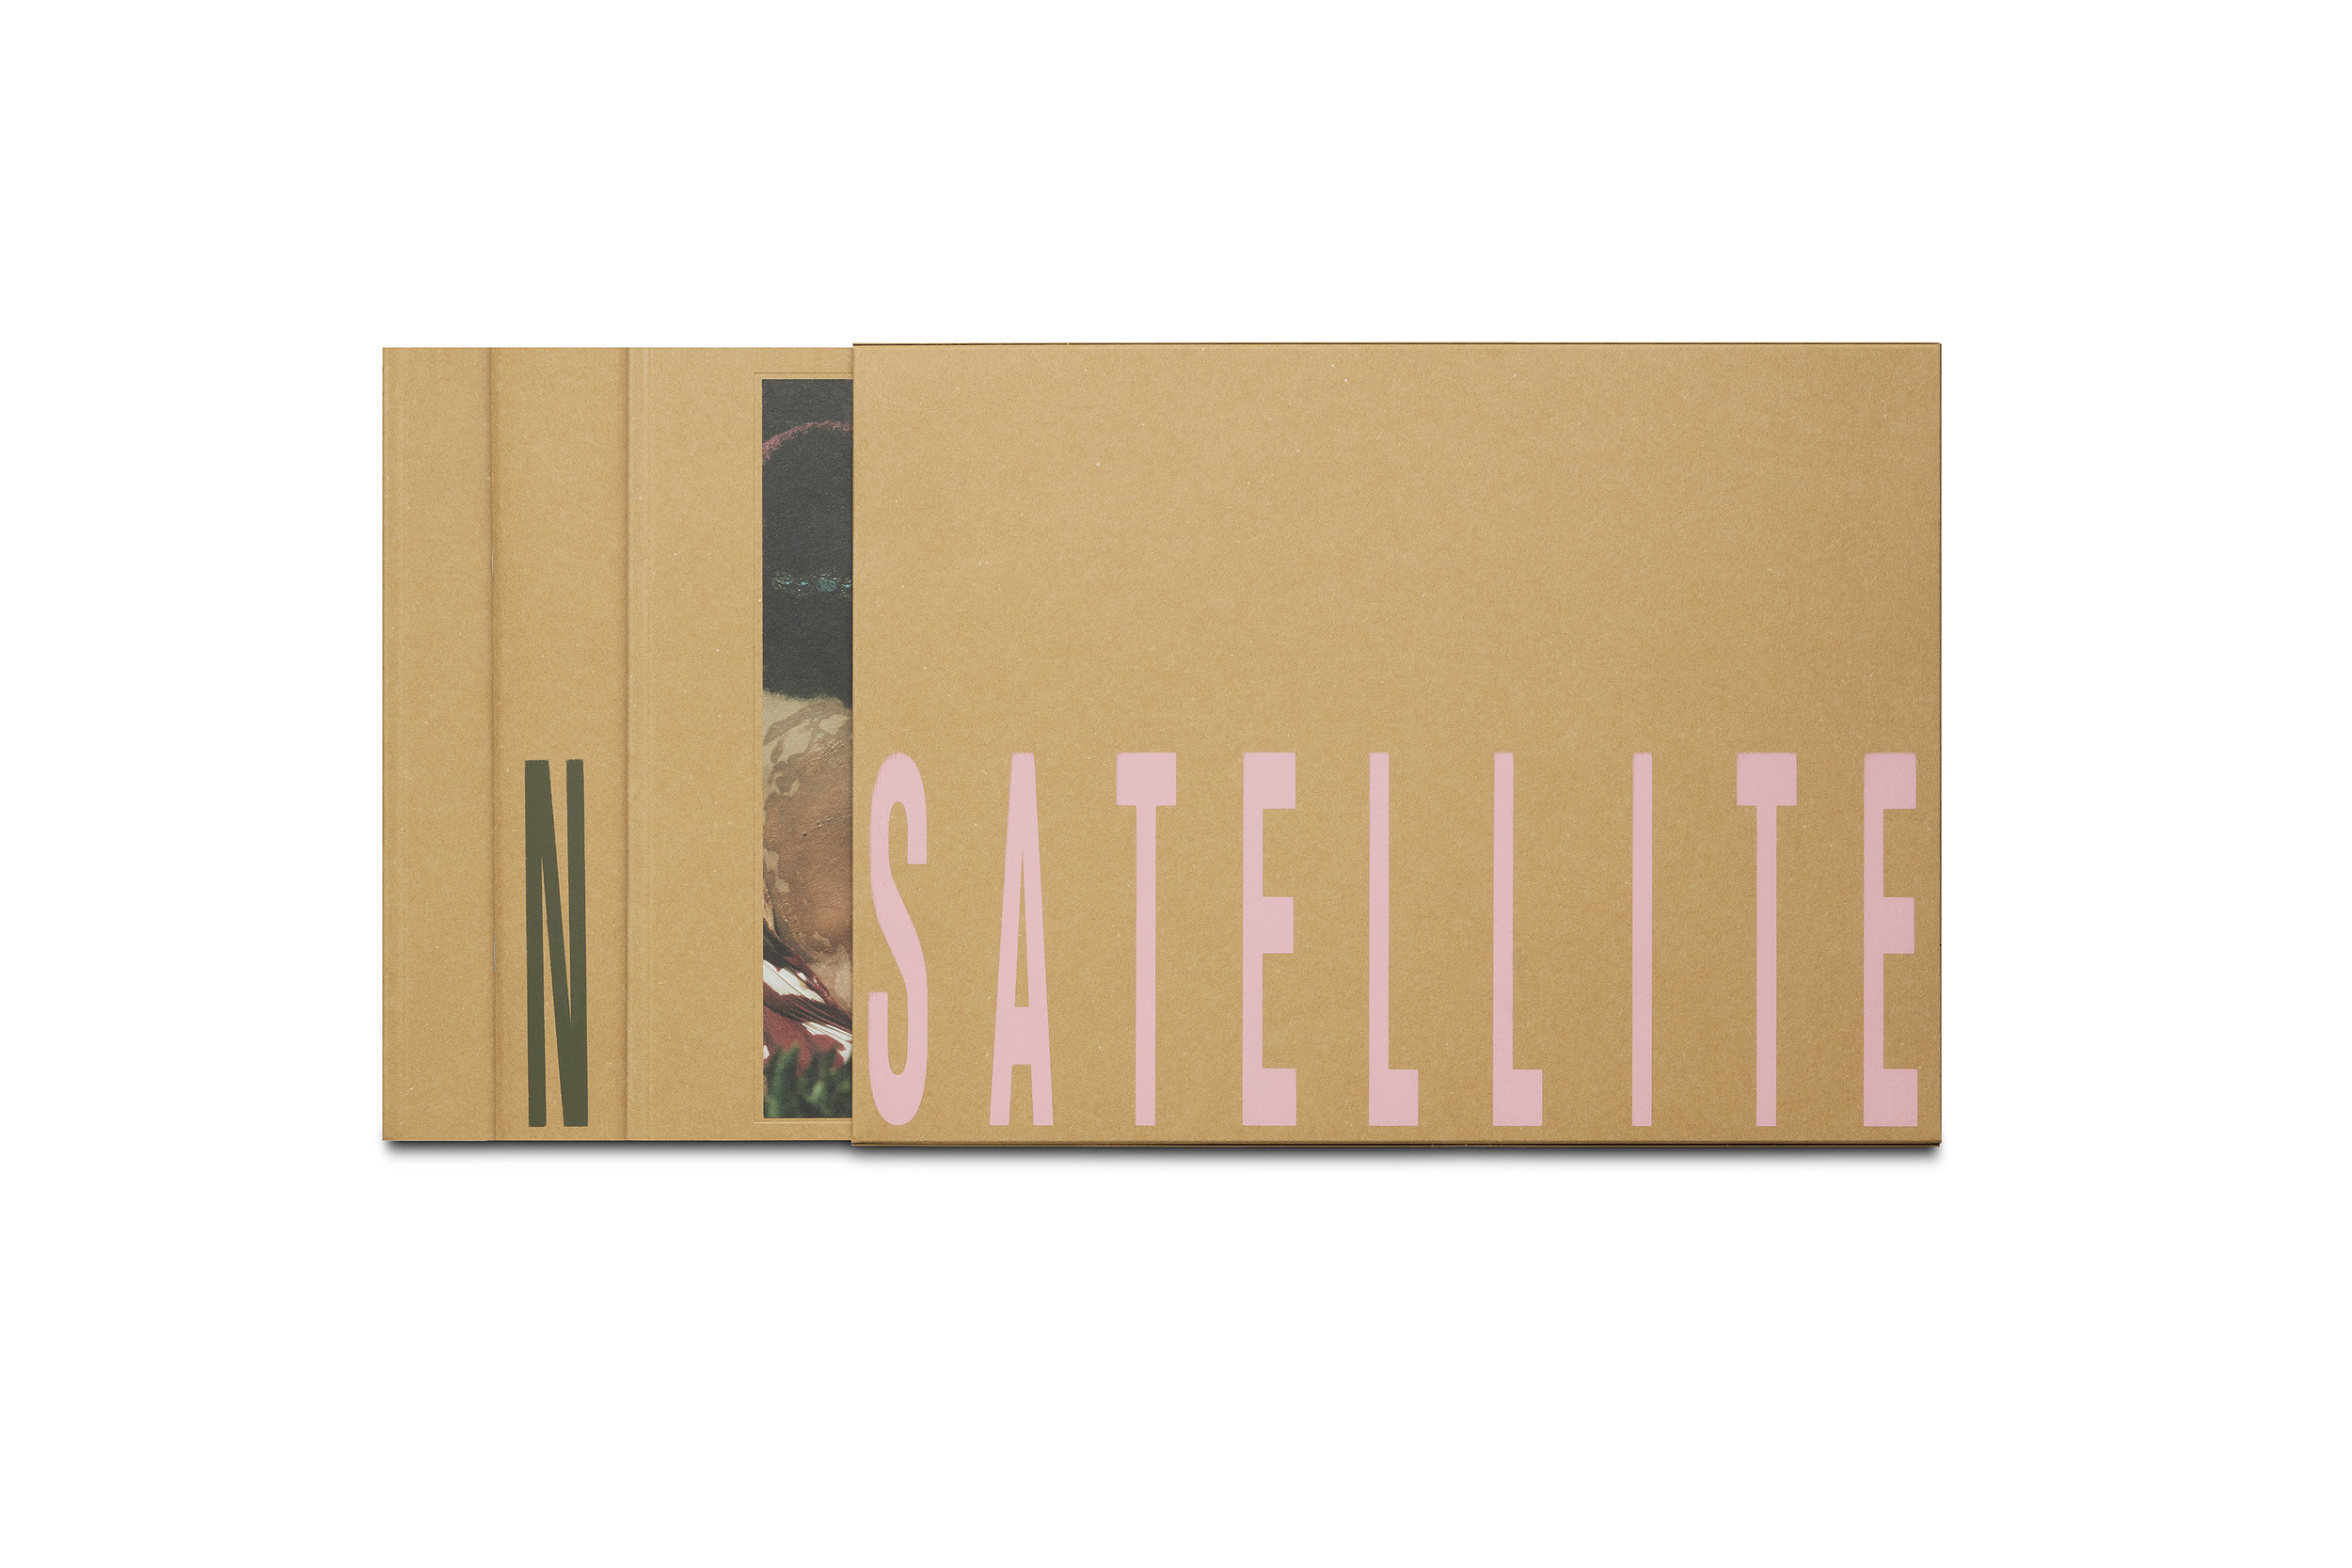 Box-Satellite.jpg